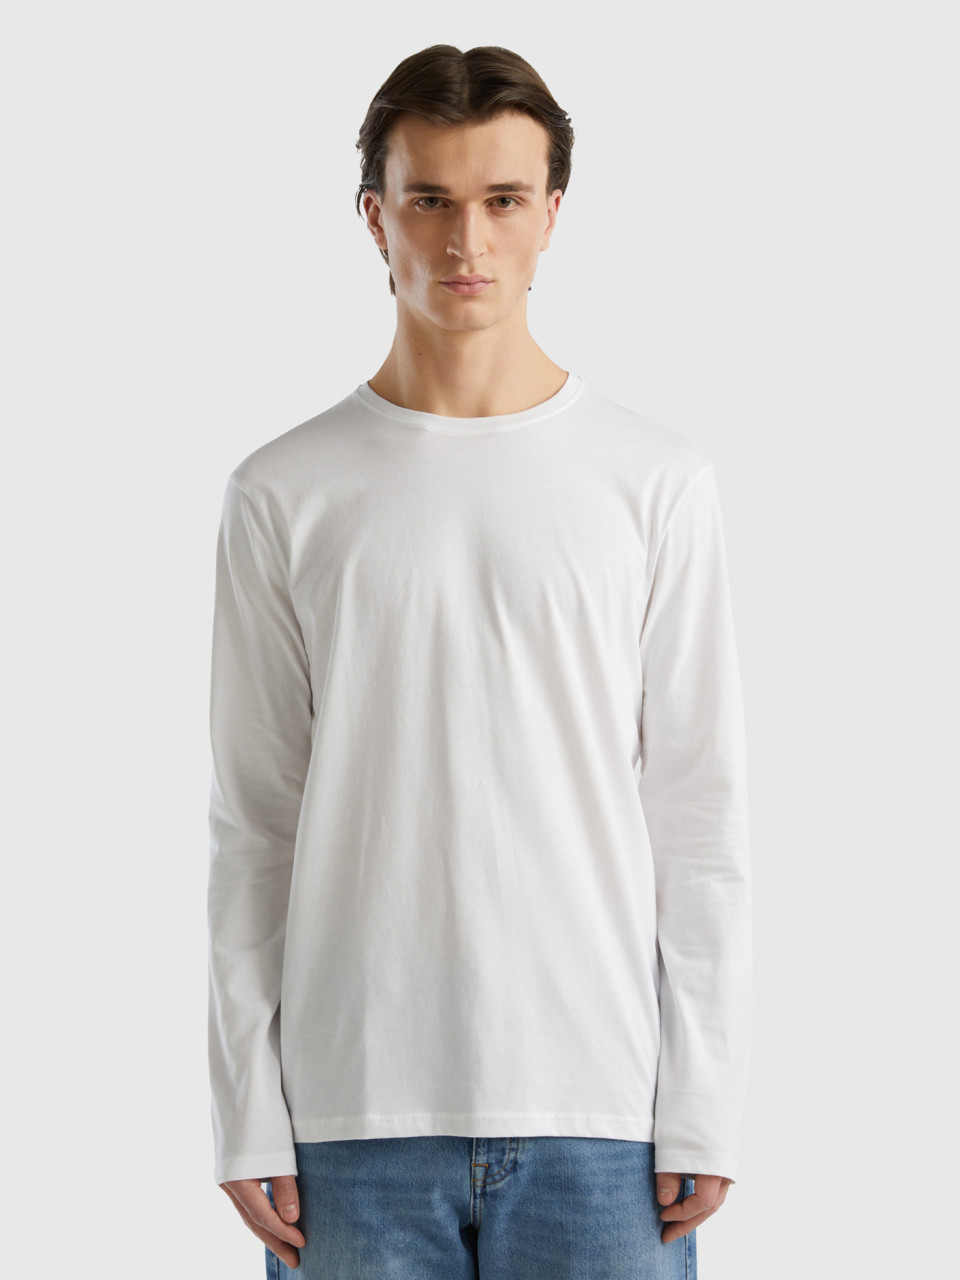 Benetton, Long Sleeve Pure Cotton T-shirt, White, Men